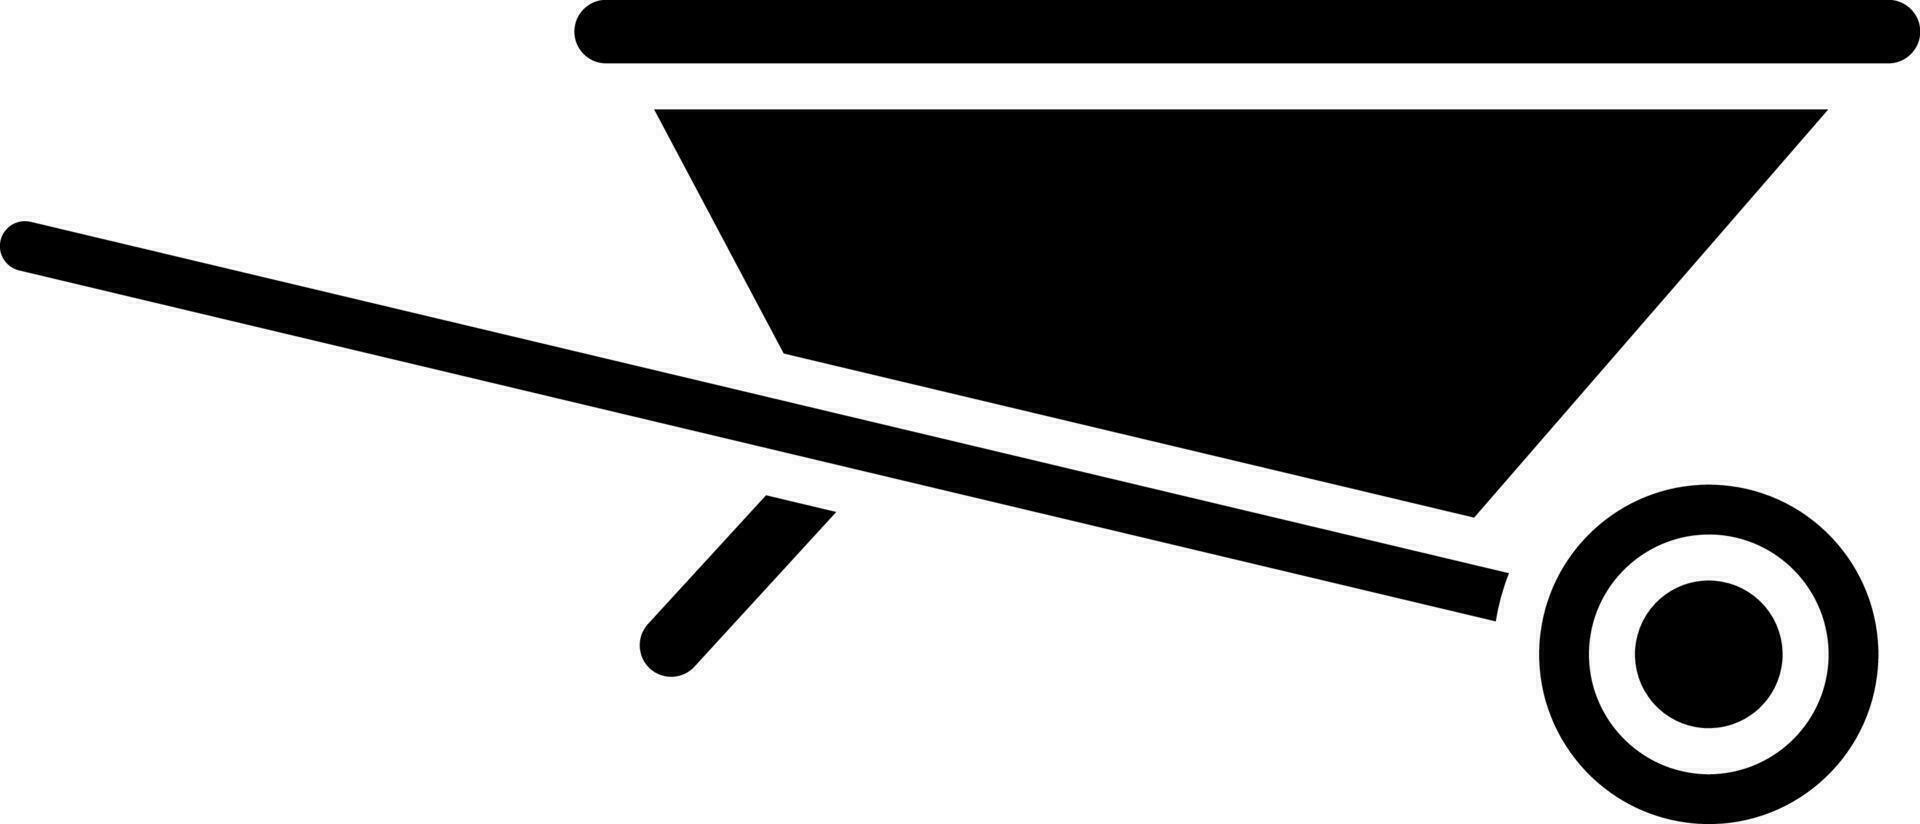 Wheelbarrow icon in flat style. vector